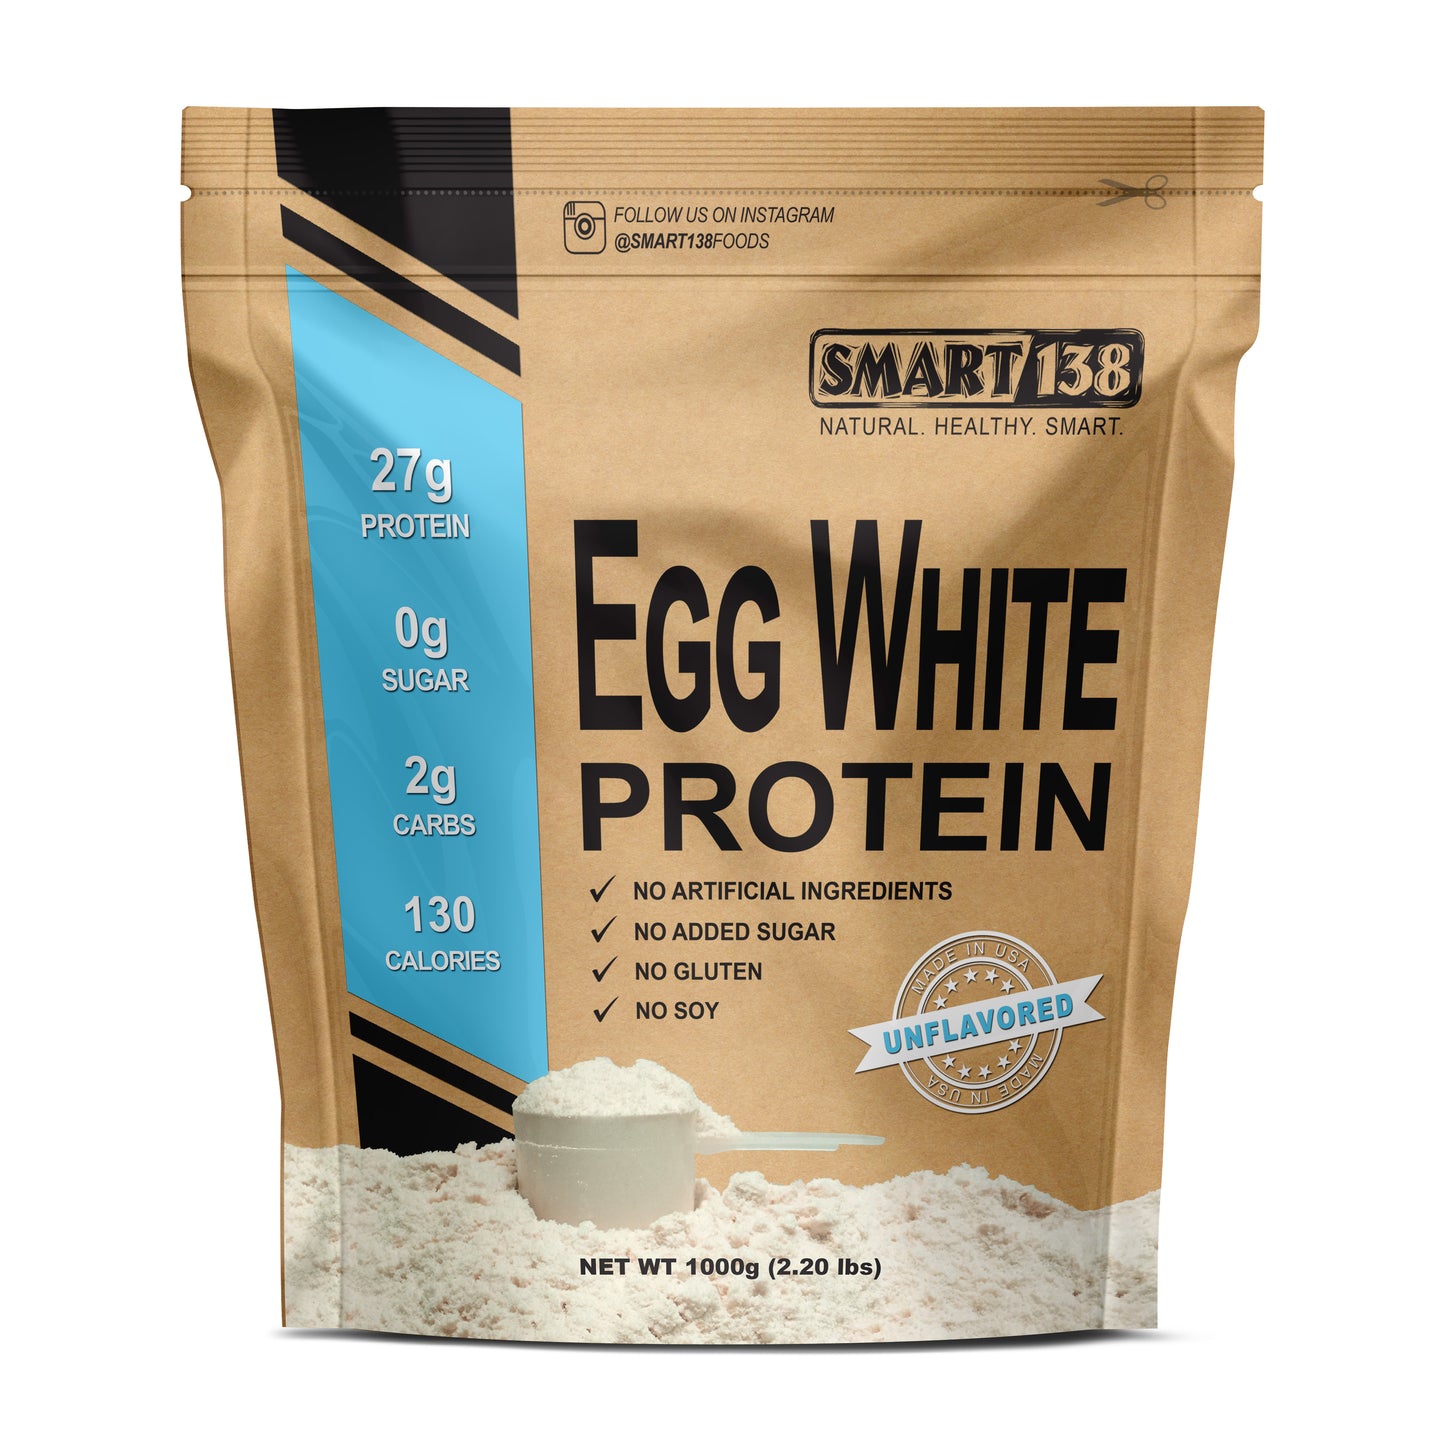 Egg White Protein - Smart 138 foods 